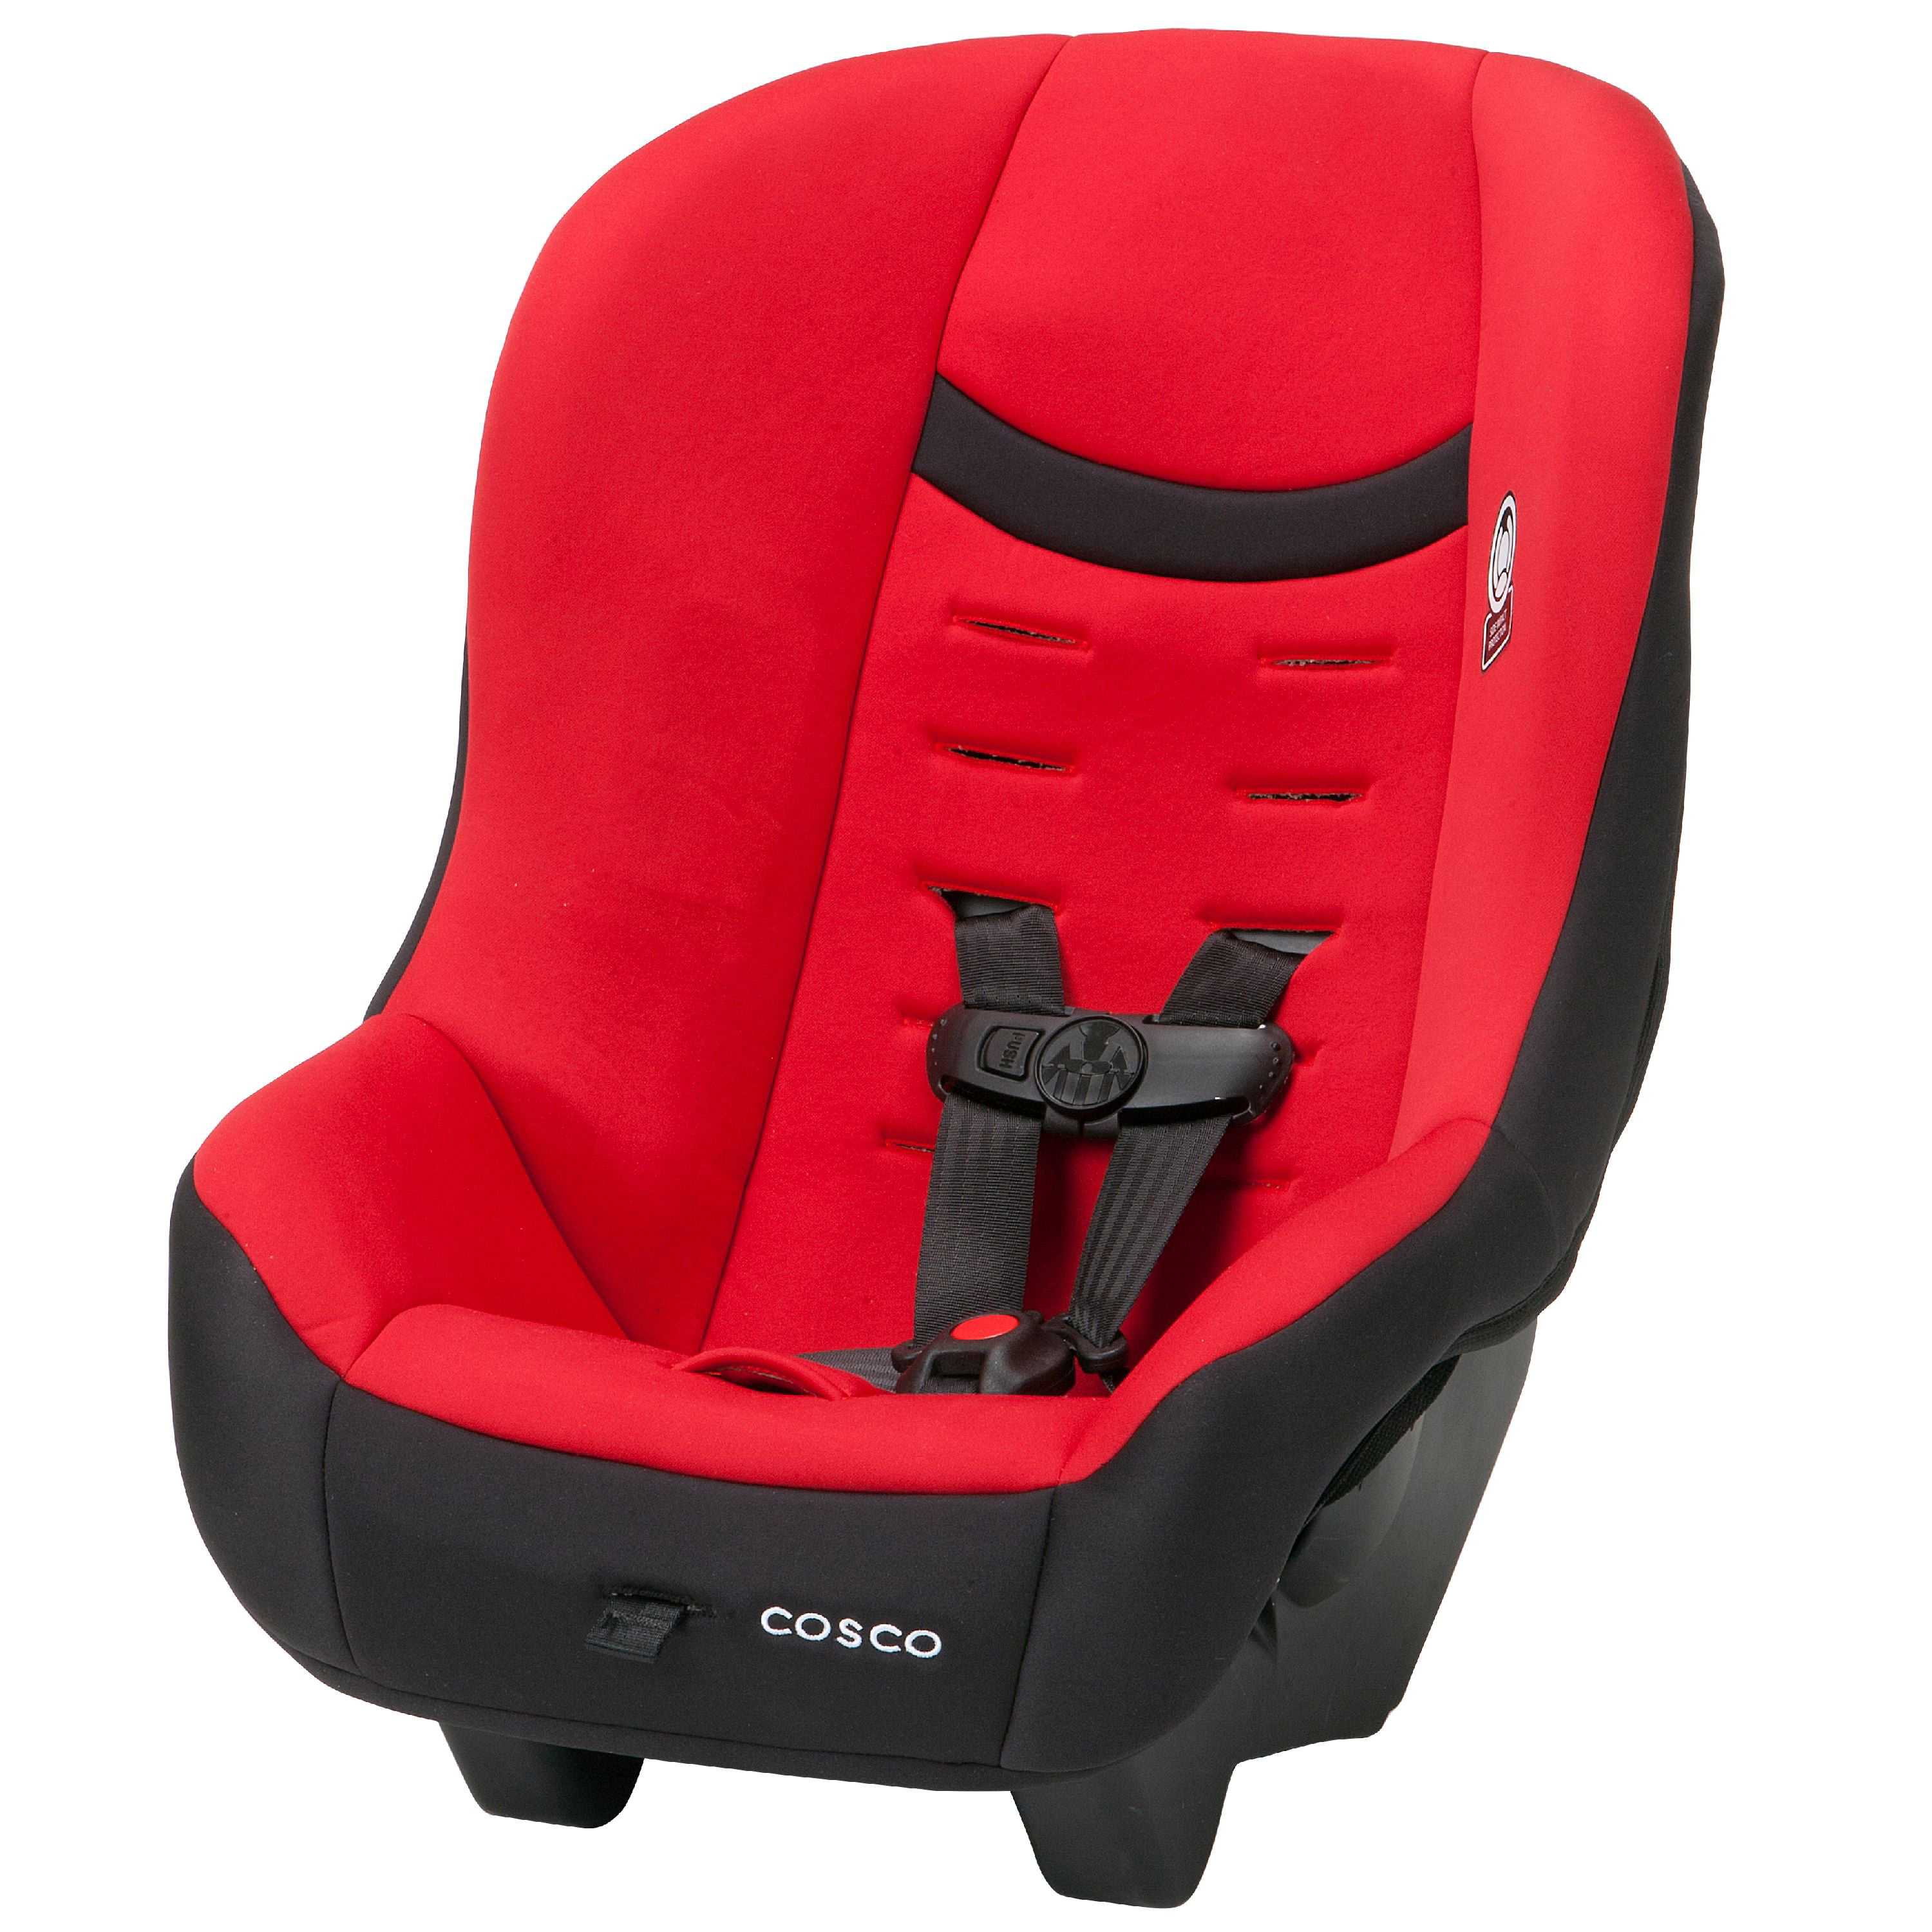 Cosco Scenera NEXT Convertible Car Seat Baby Child Infant Travel Kids